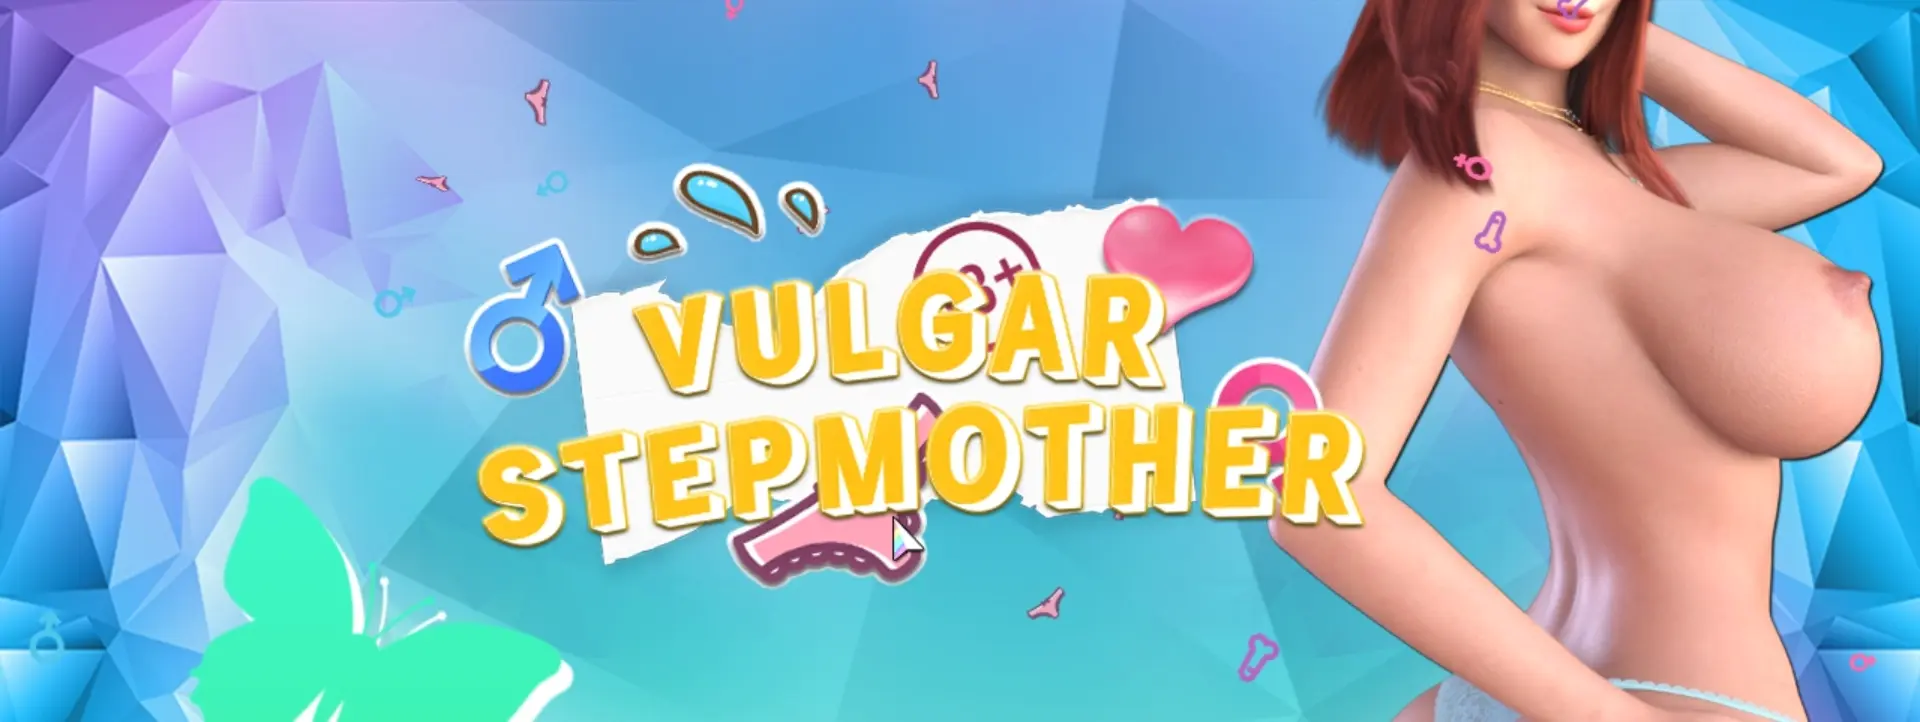 Vulgar Stepmother main image